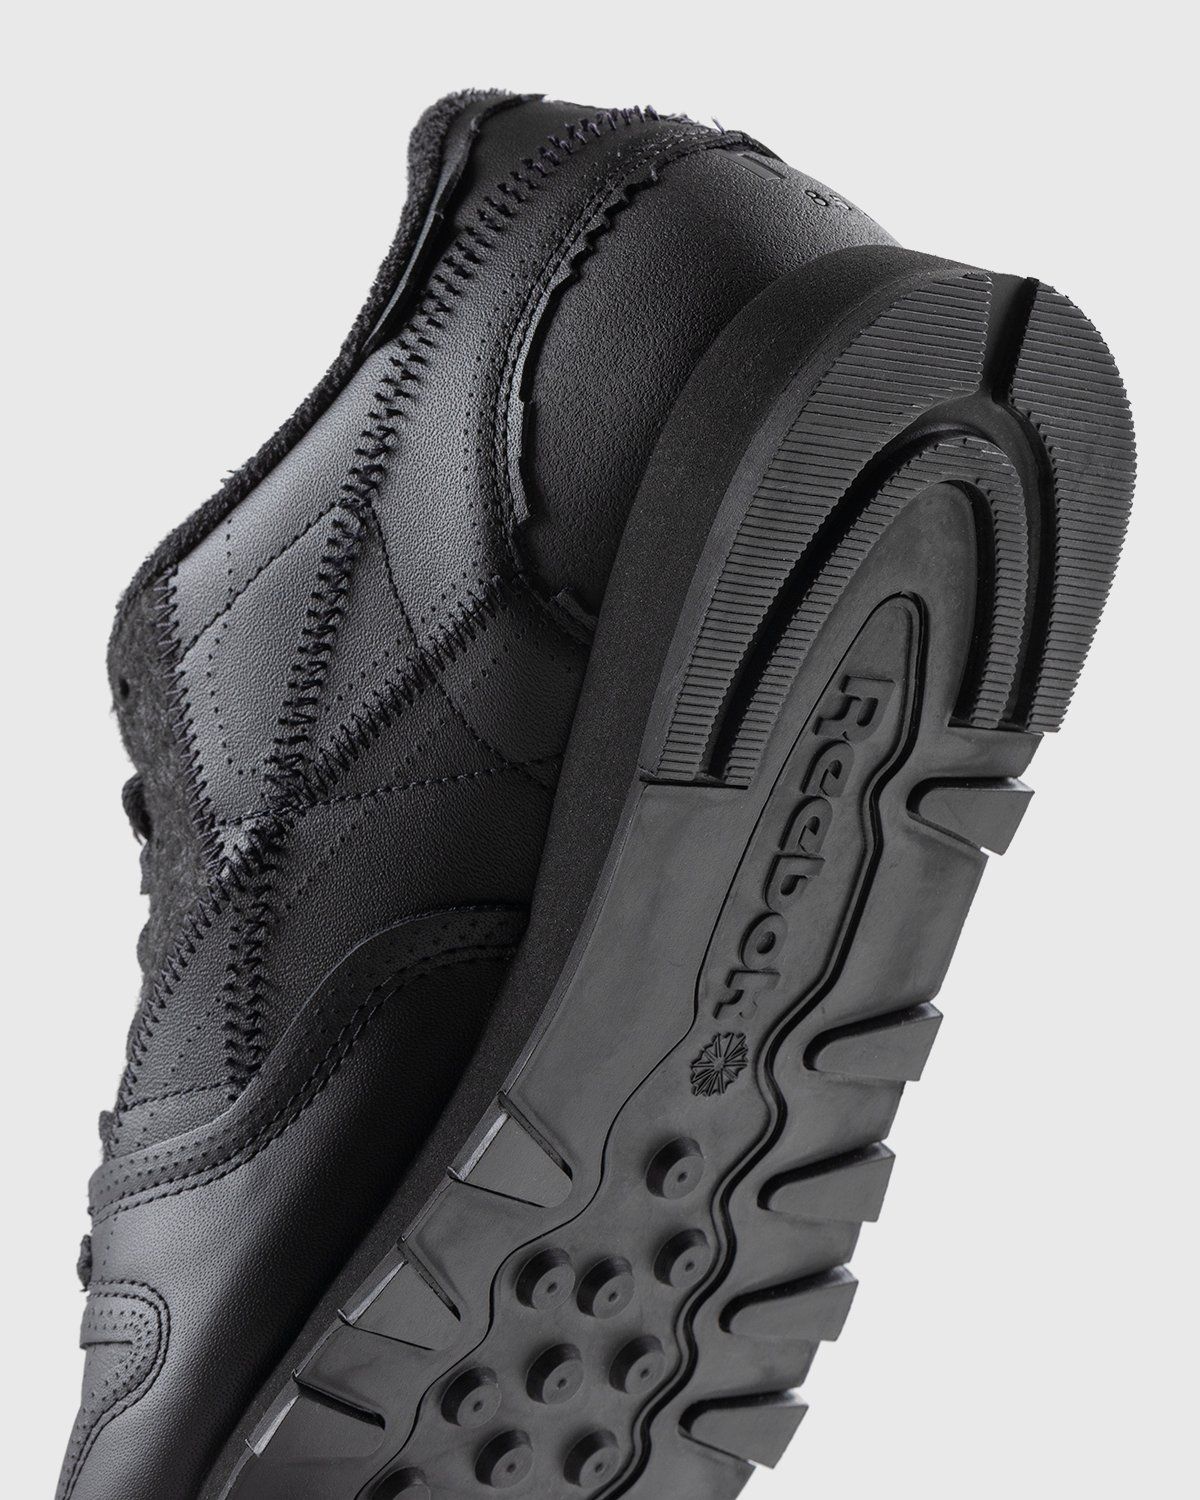 Maison Margiela x Reebok – Classic Leather Memory Of Black/Footwear White/Black - Sneakers - Black - Image 6